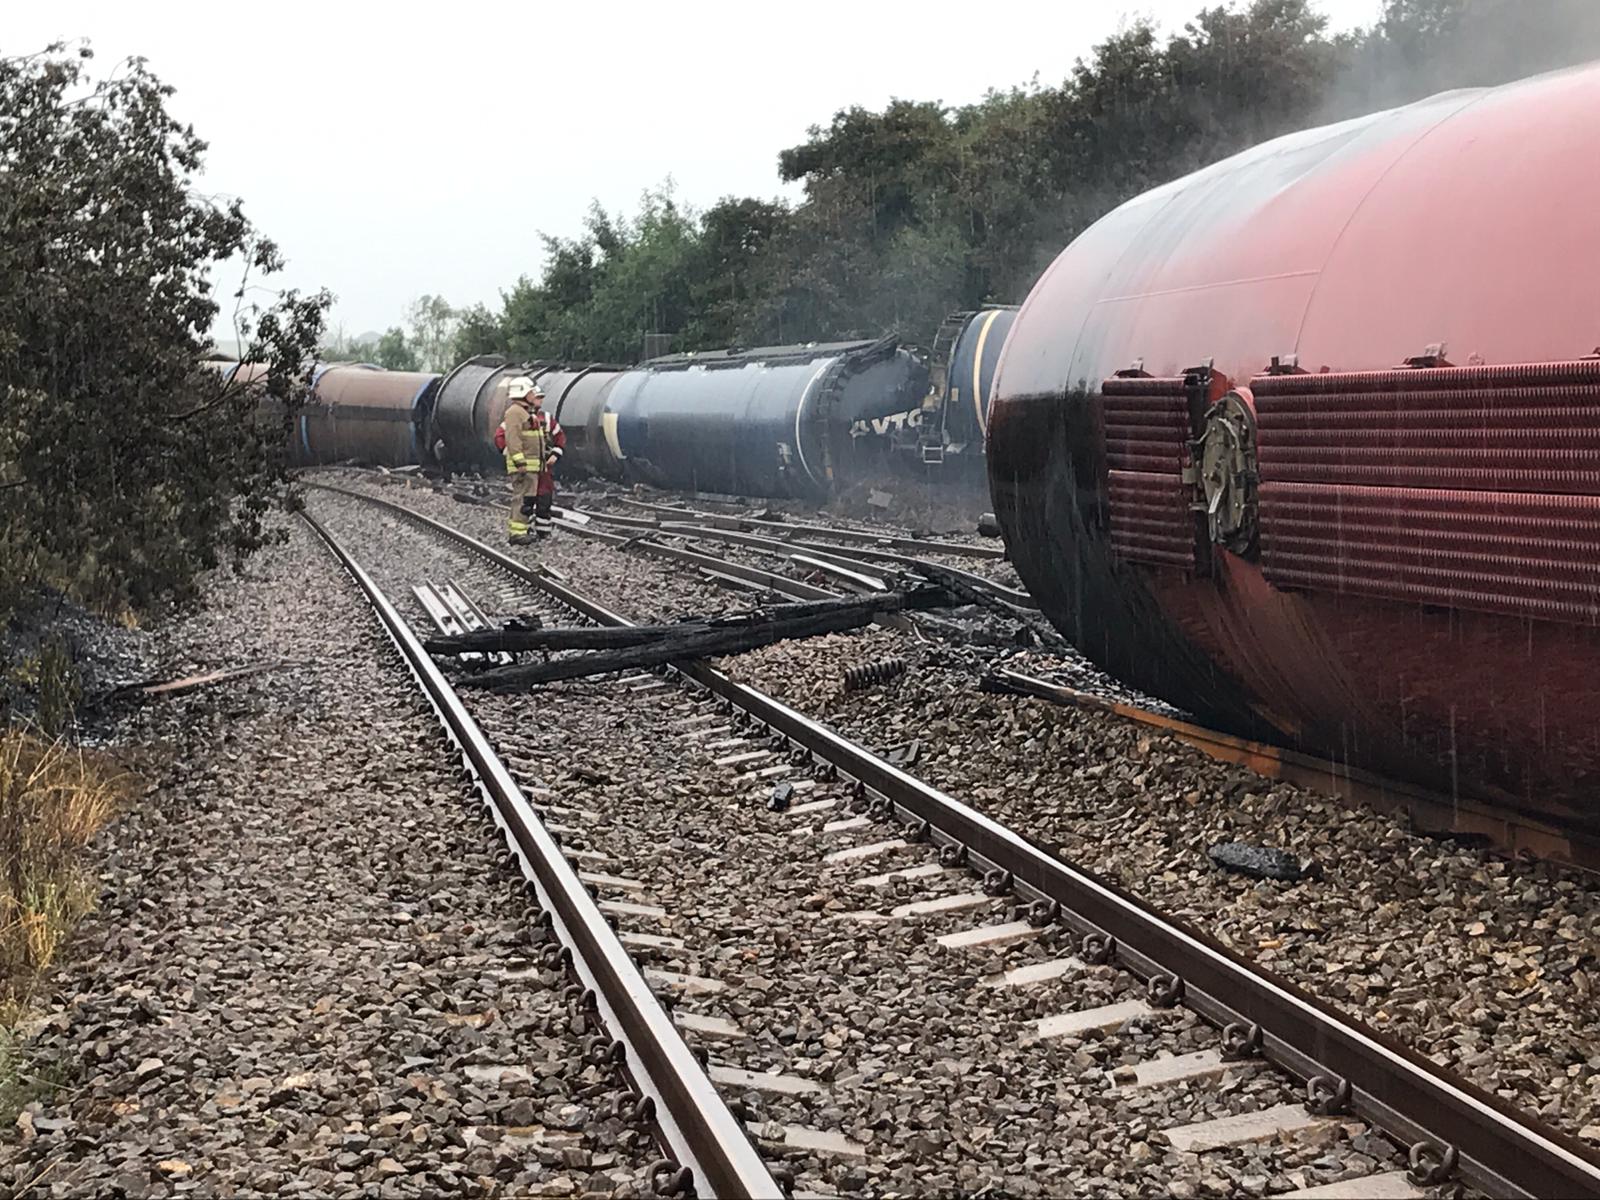 Natural Resources Wales / Llangennech freight train derailment and